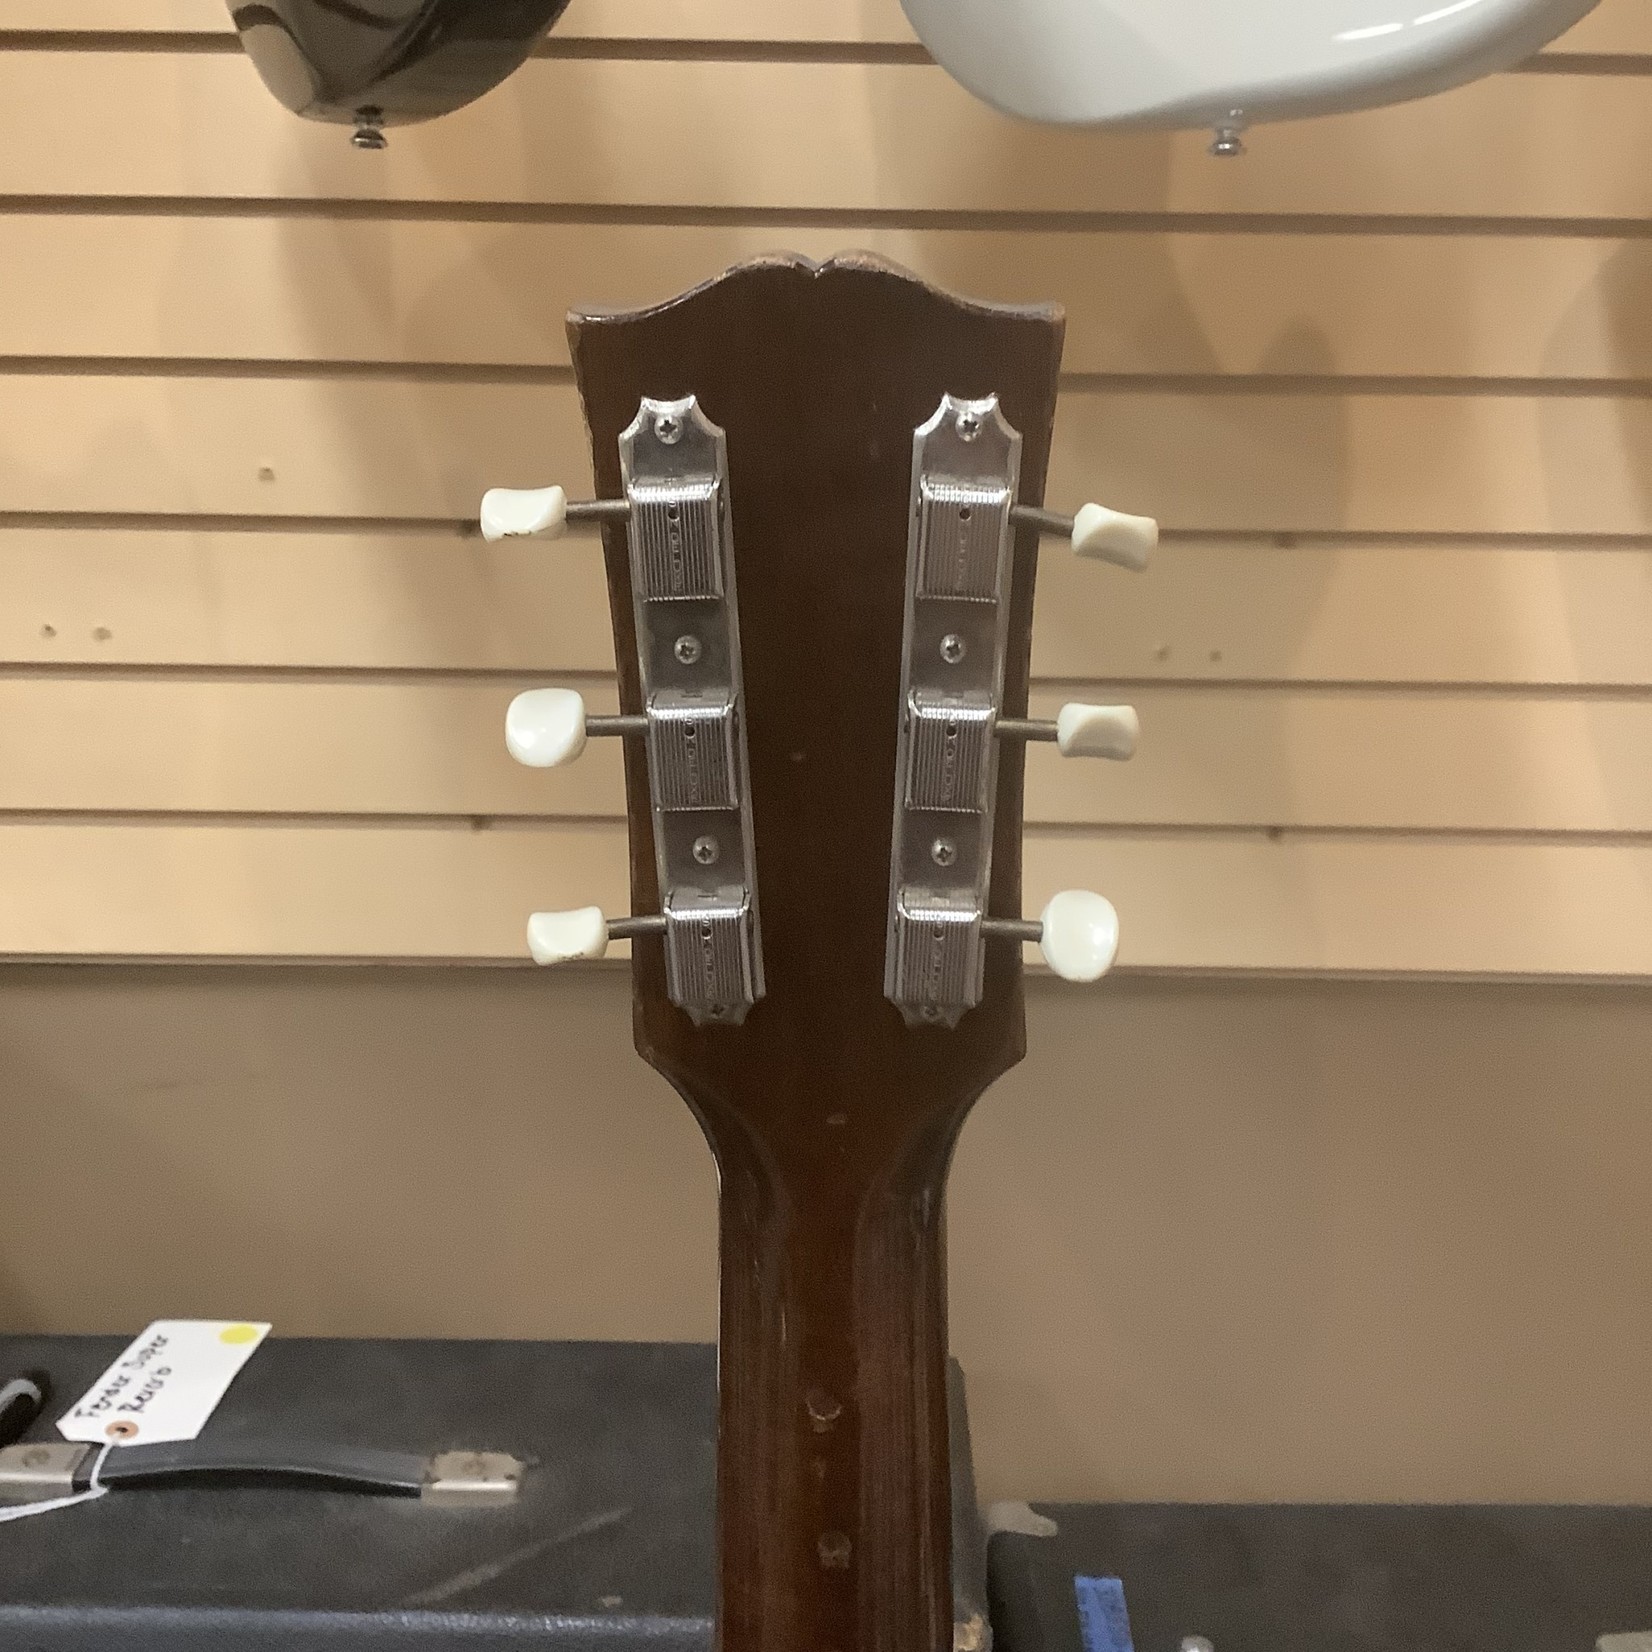 Gibson 1959 Gibson LG-1 Sunburst